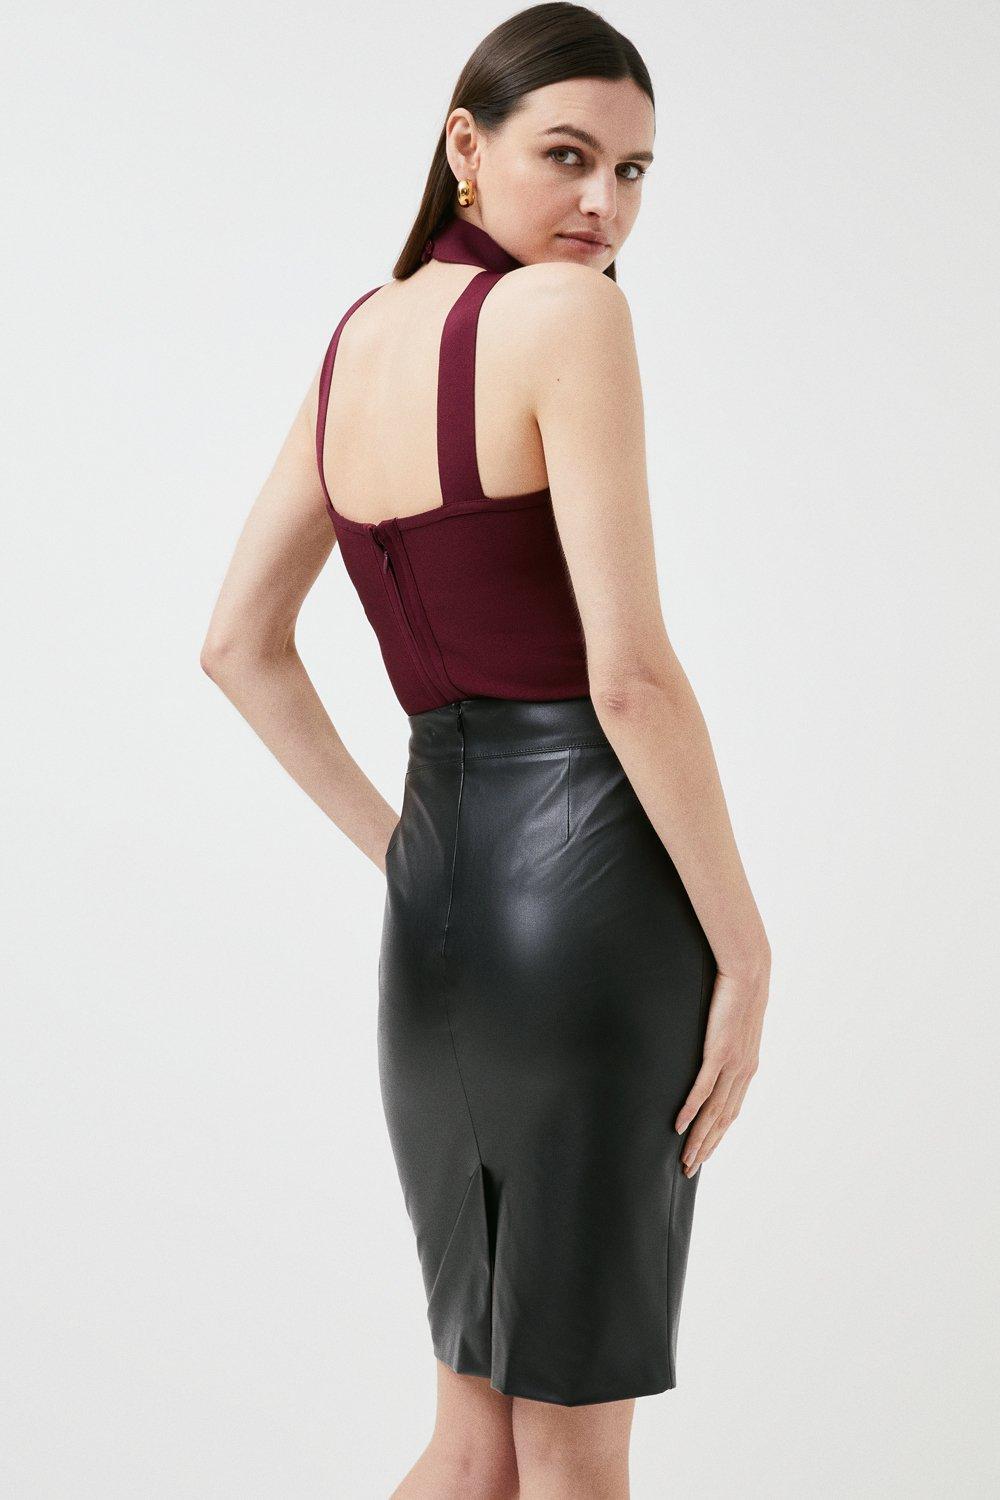 karen millen faux leather mini skirt